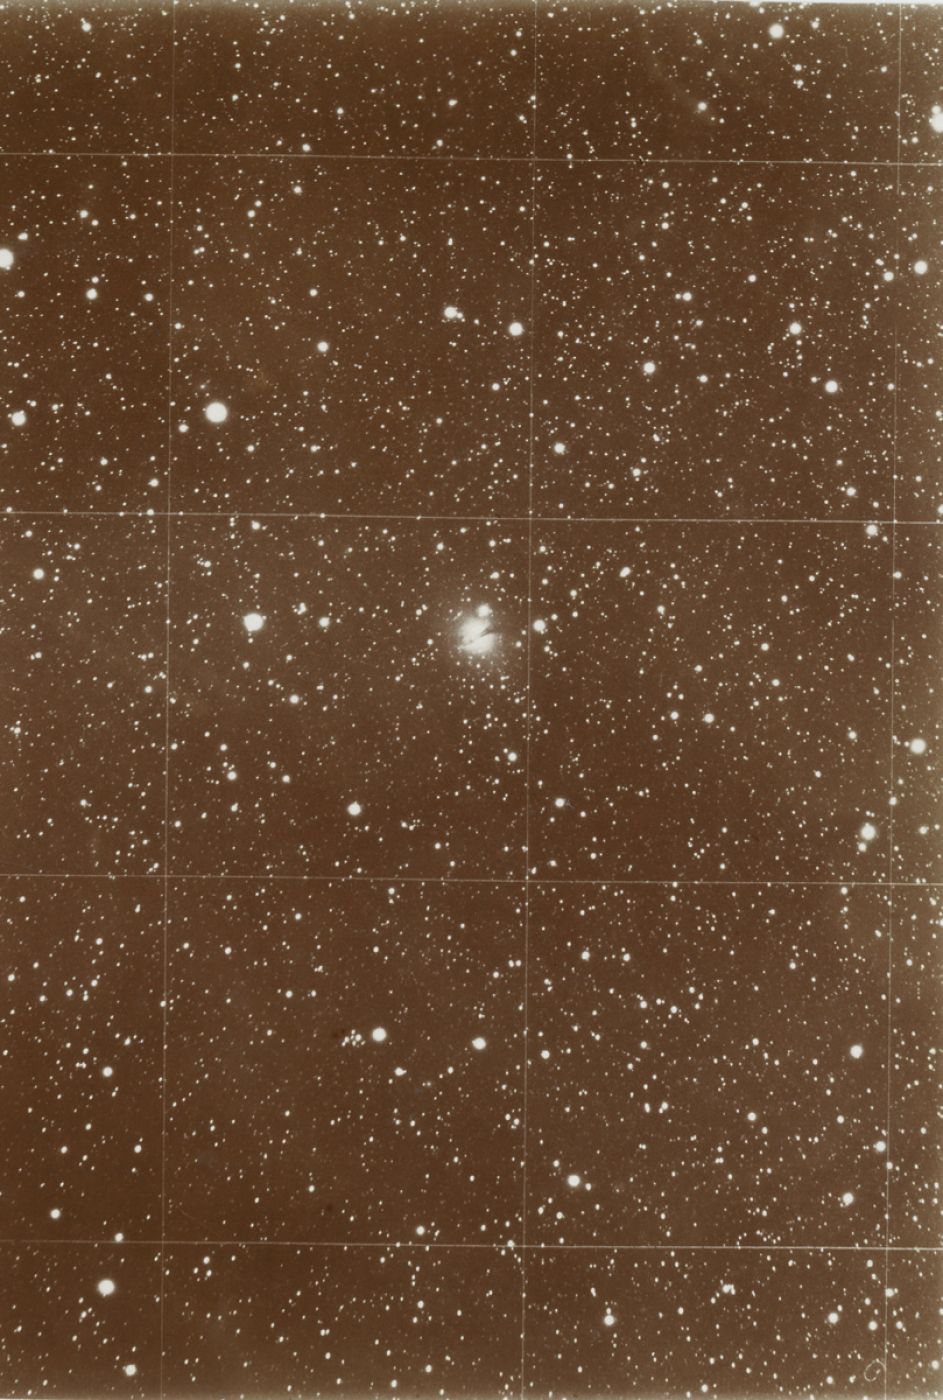 John Franklin-Adams, “Nebula”, 1905 ca.